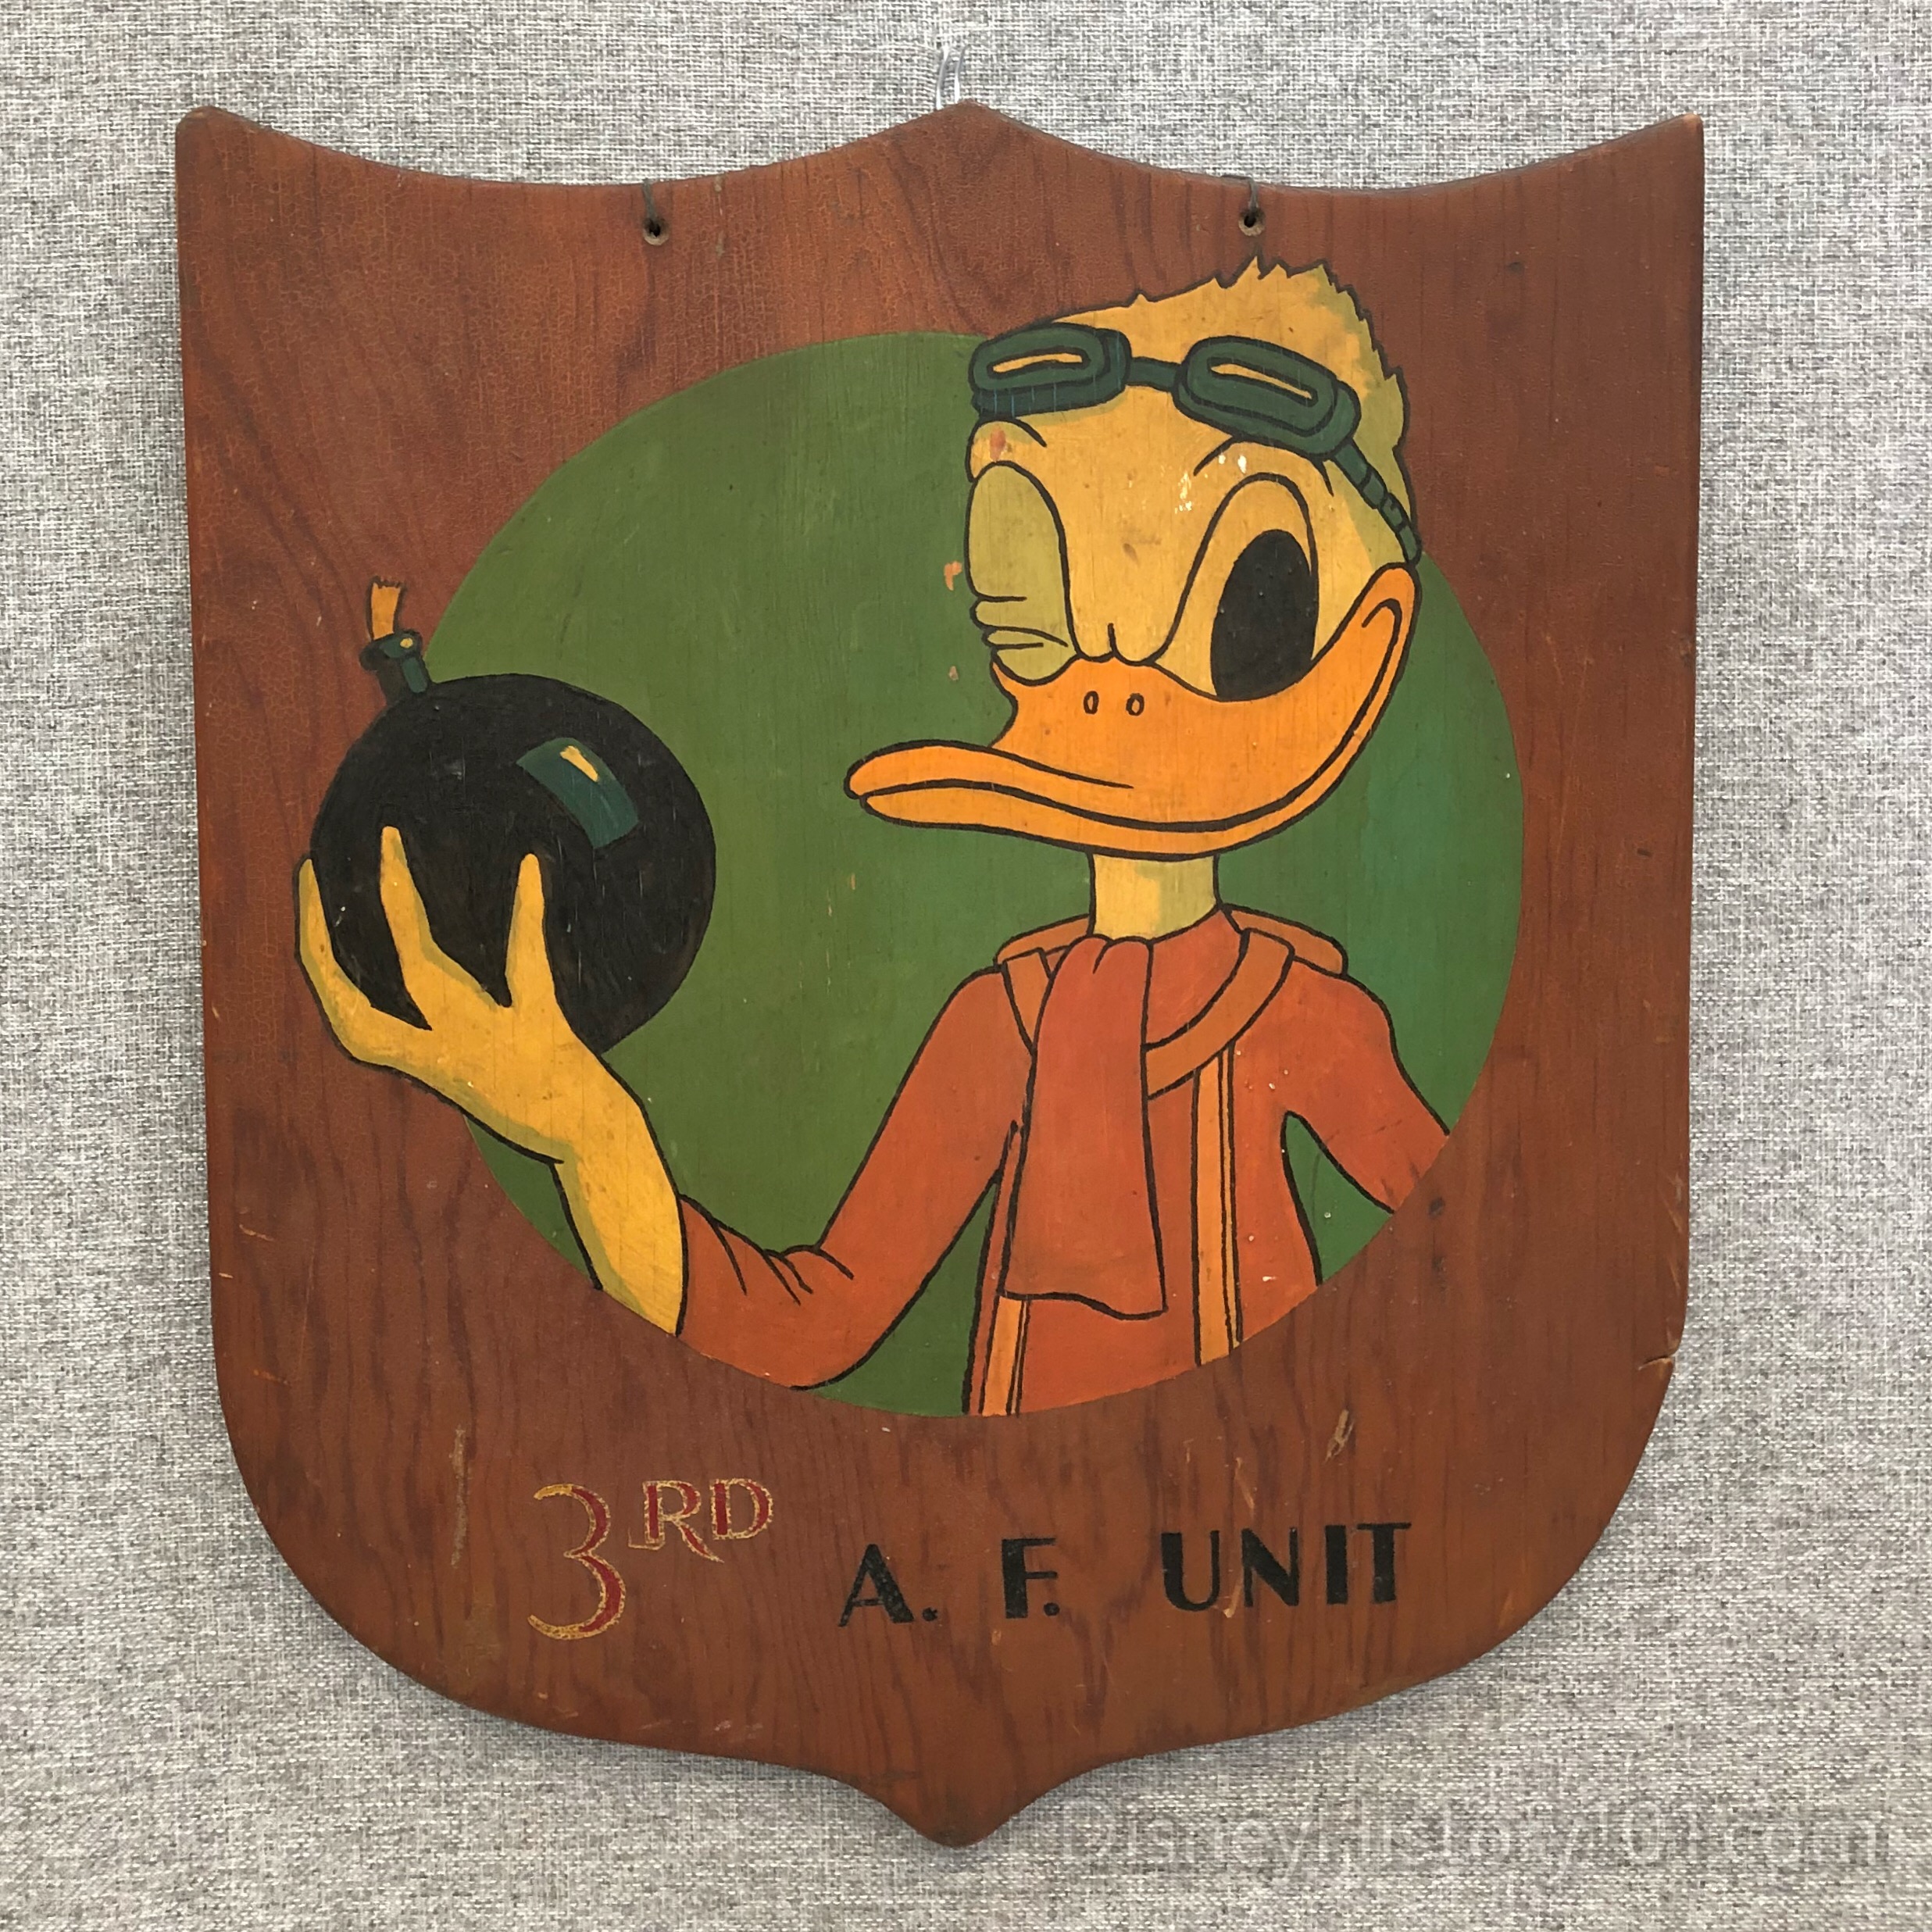 An AIR FORCE “3rd” UNIT plaque